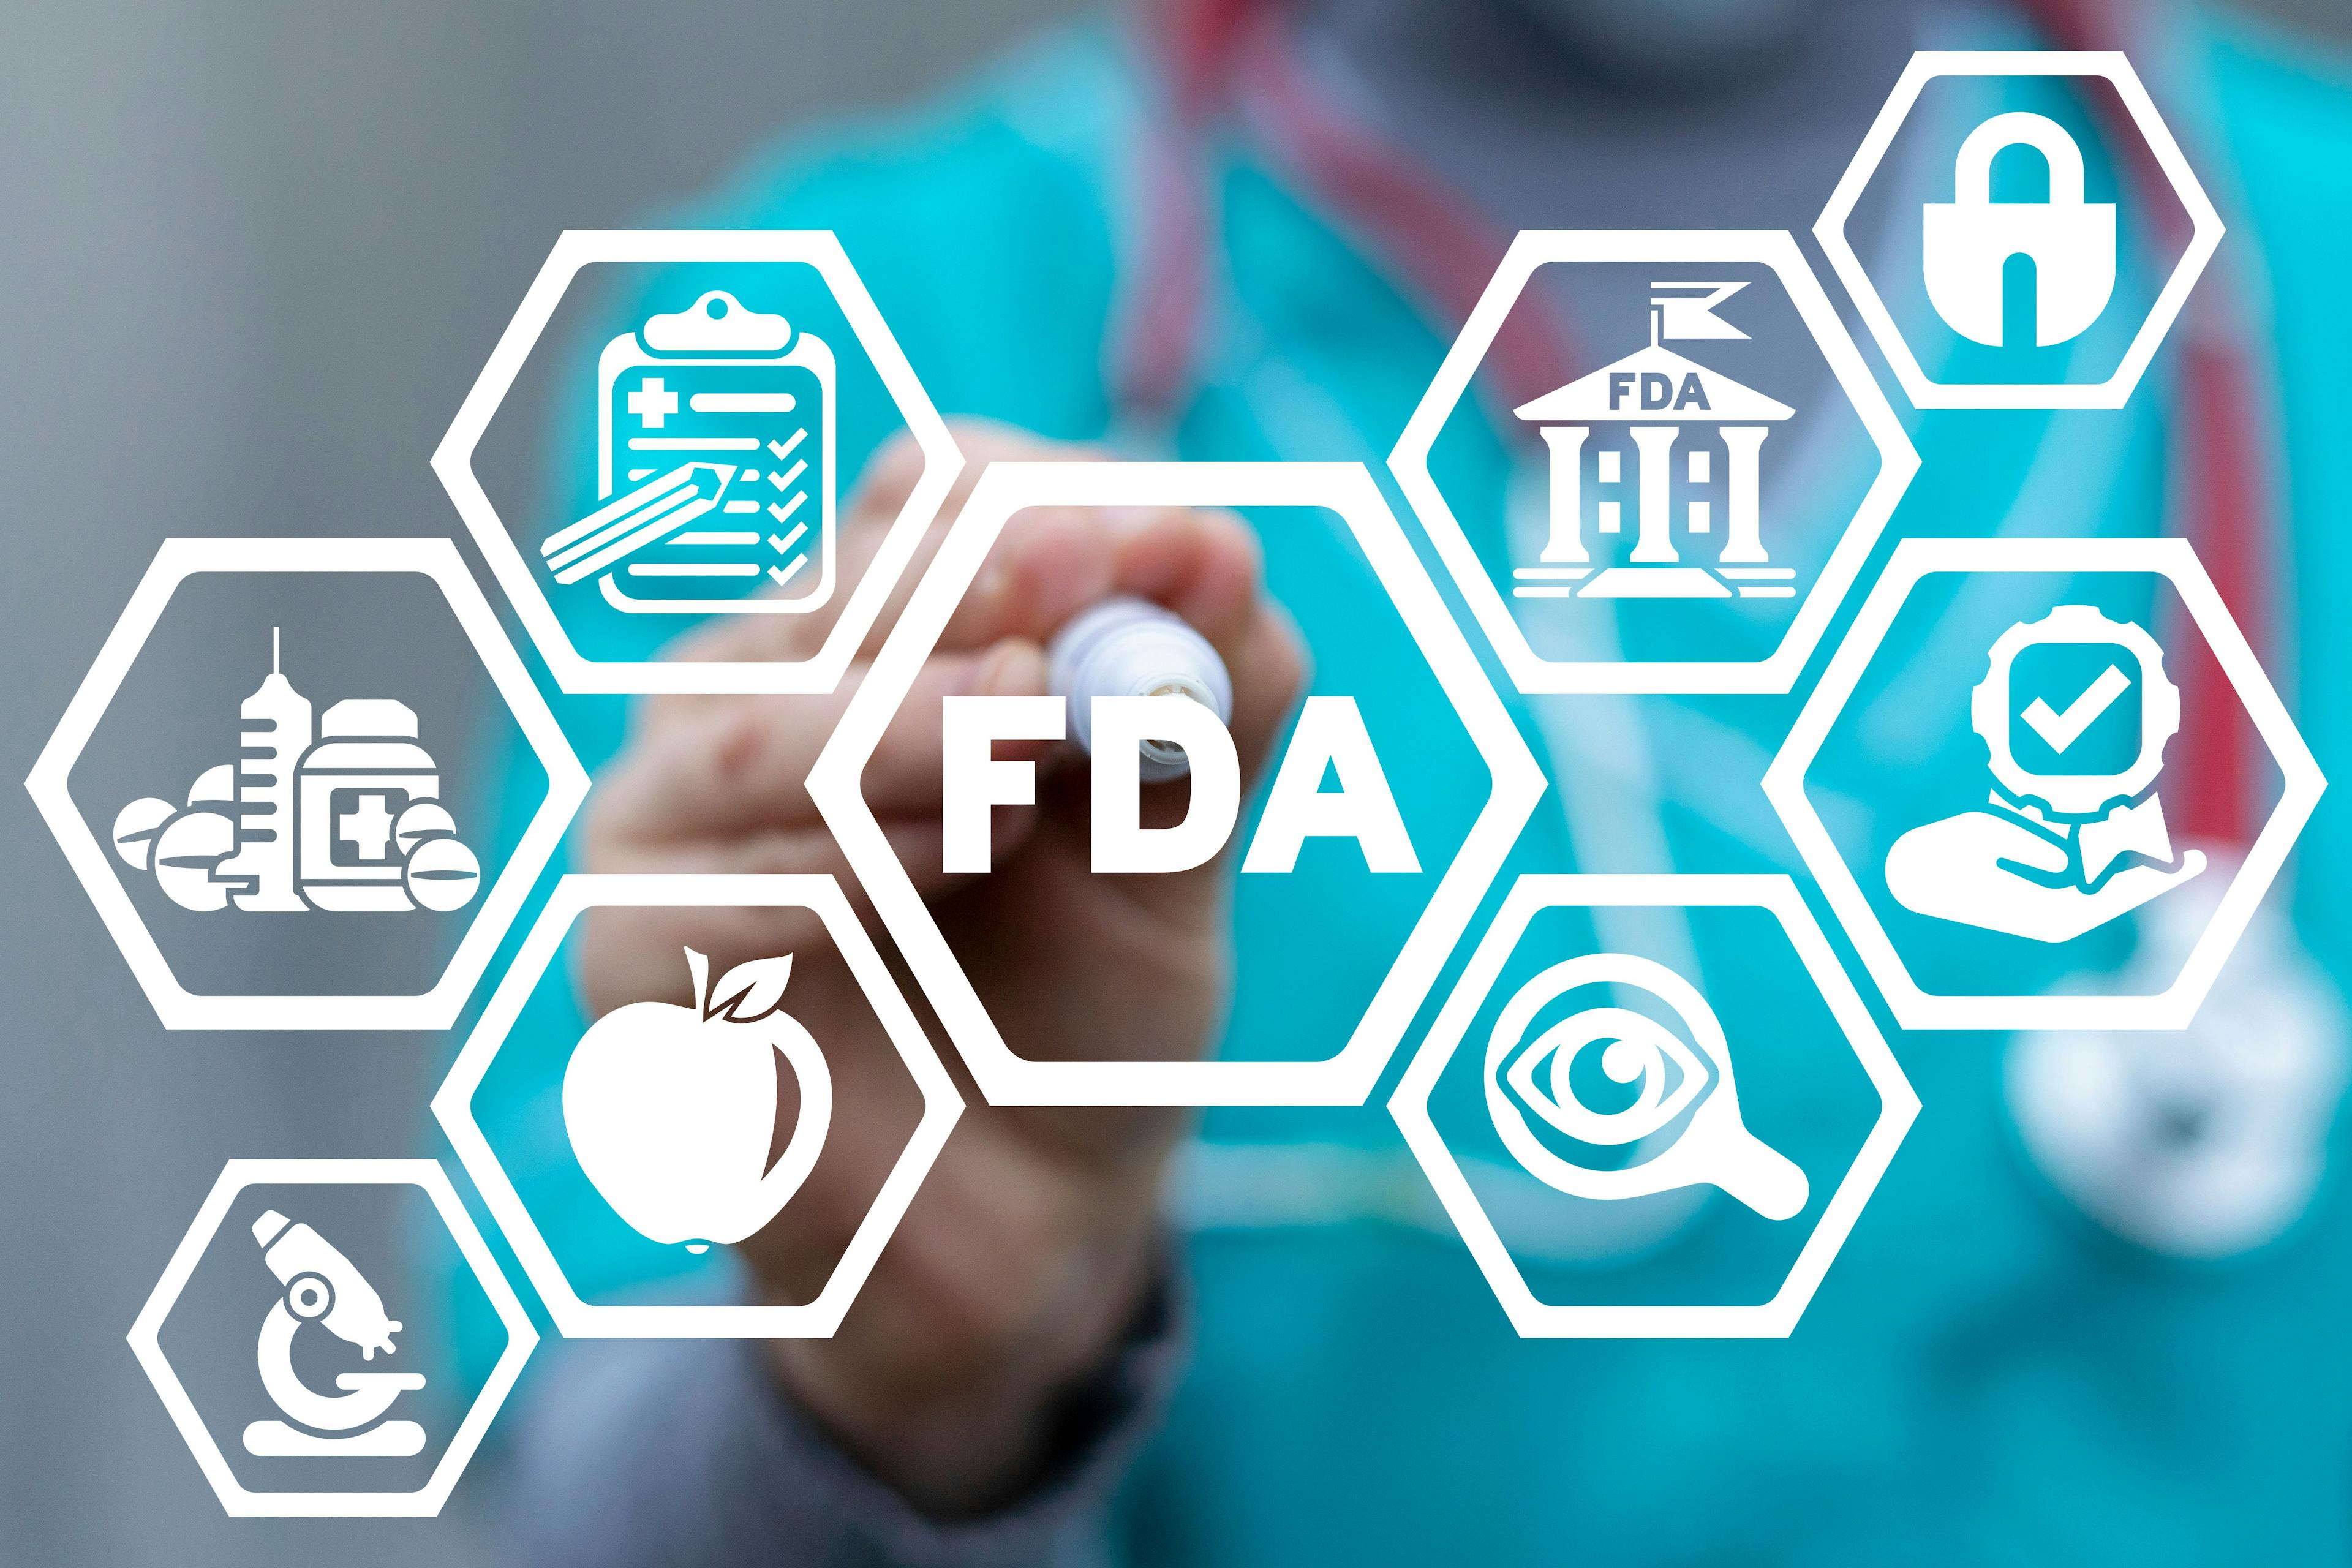 Concept of FDA Food and Drug Administration -- Image credit: wladimir1804 | stock.adobe.com